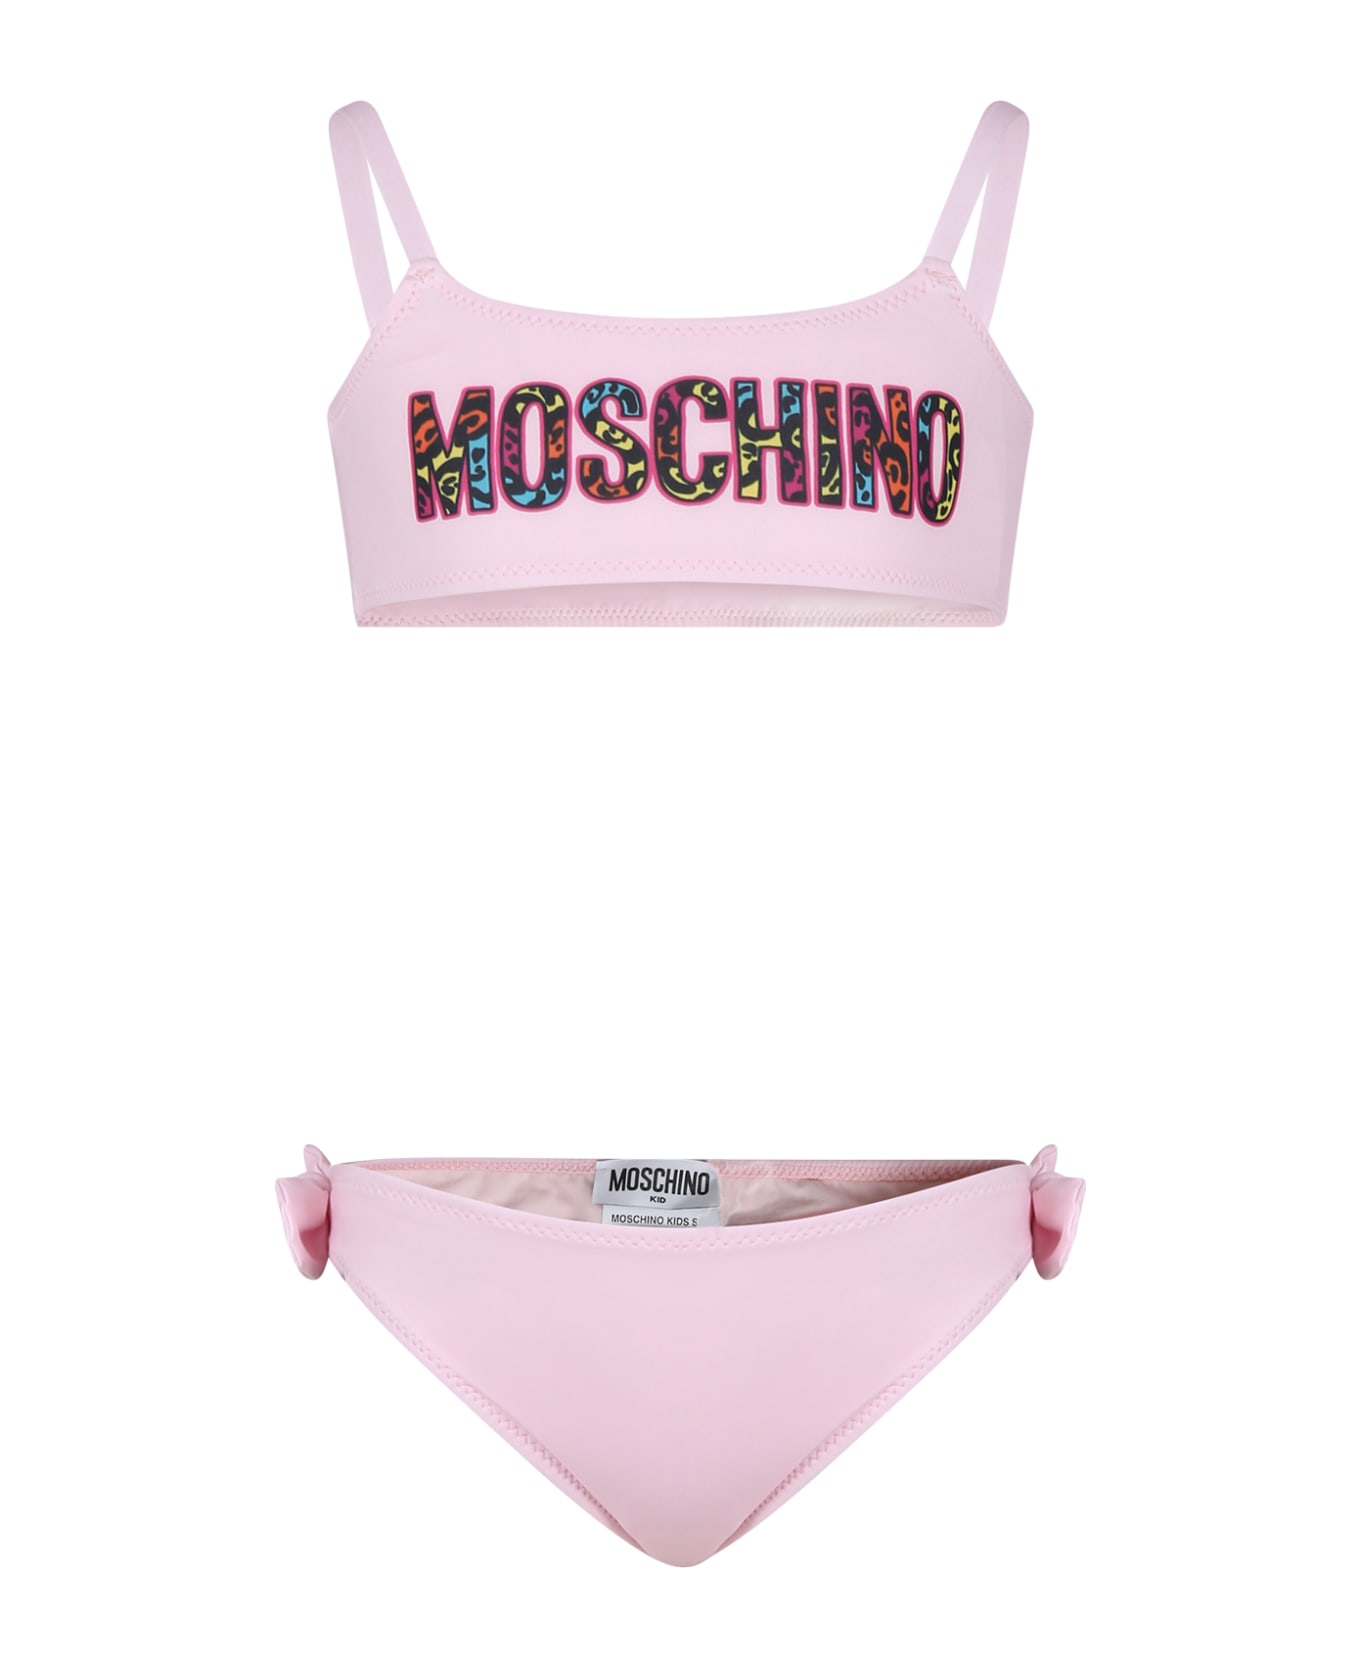 Moschino Pink Bikini For Girl With Logo - Pink